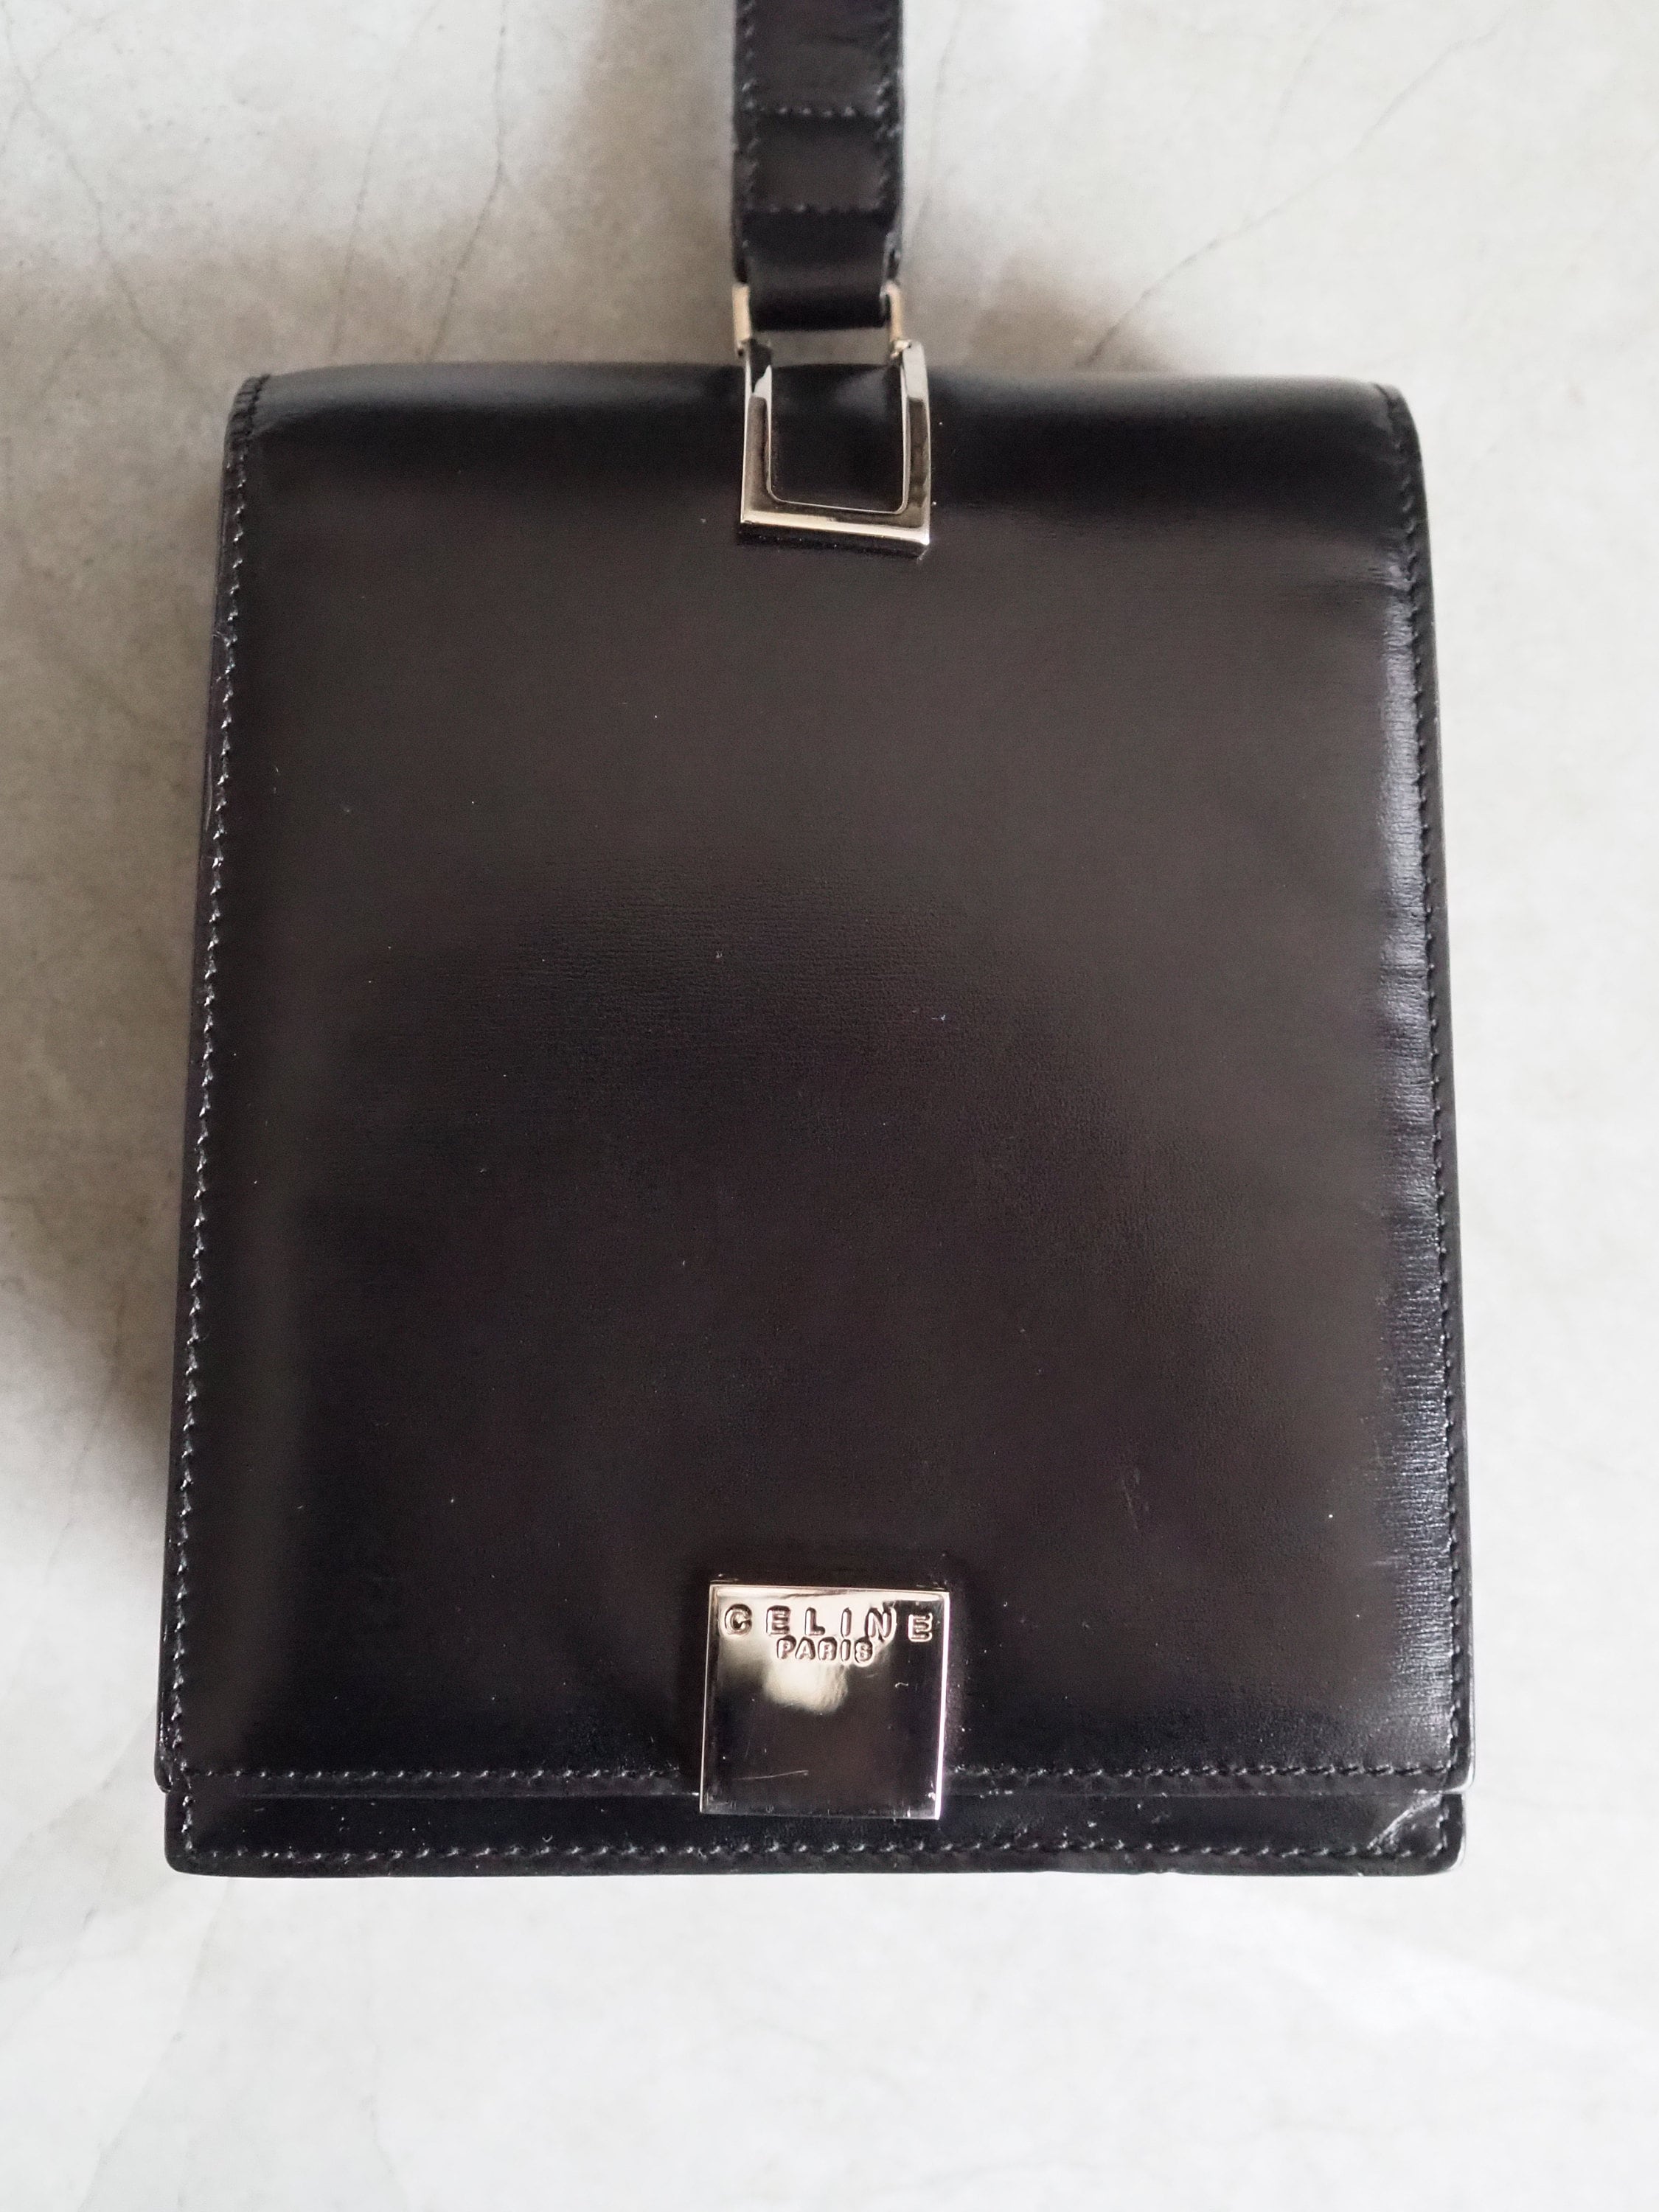 CELINE Logo Mini Hand Bag Black Silver Leather Vintage Authentic